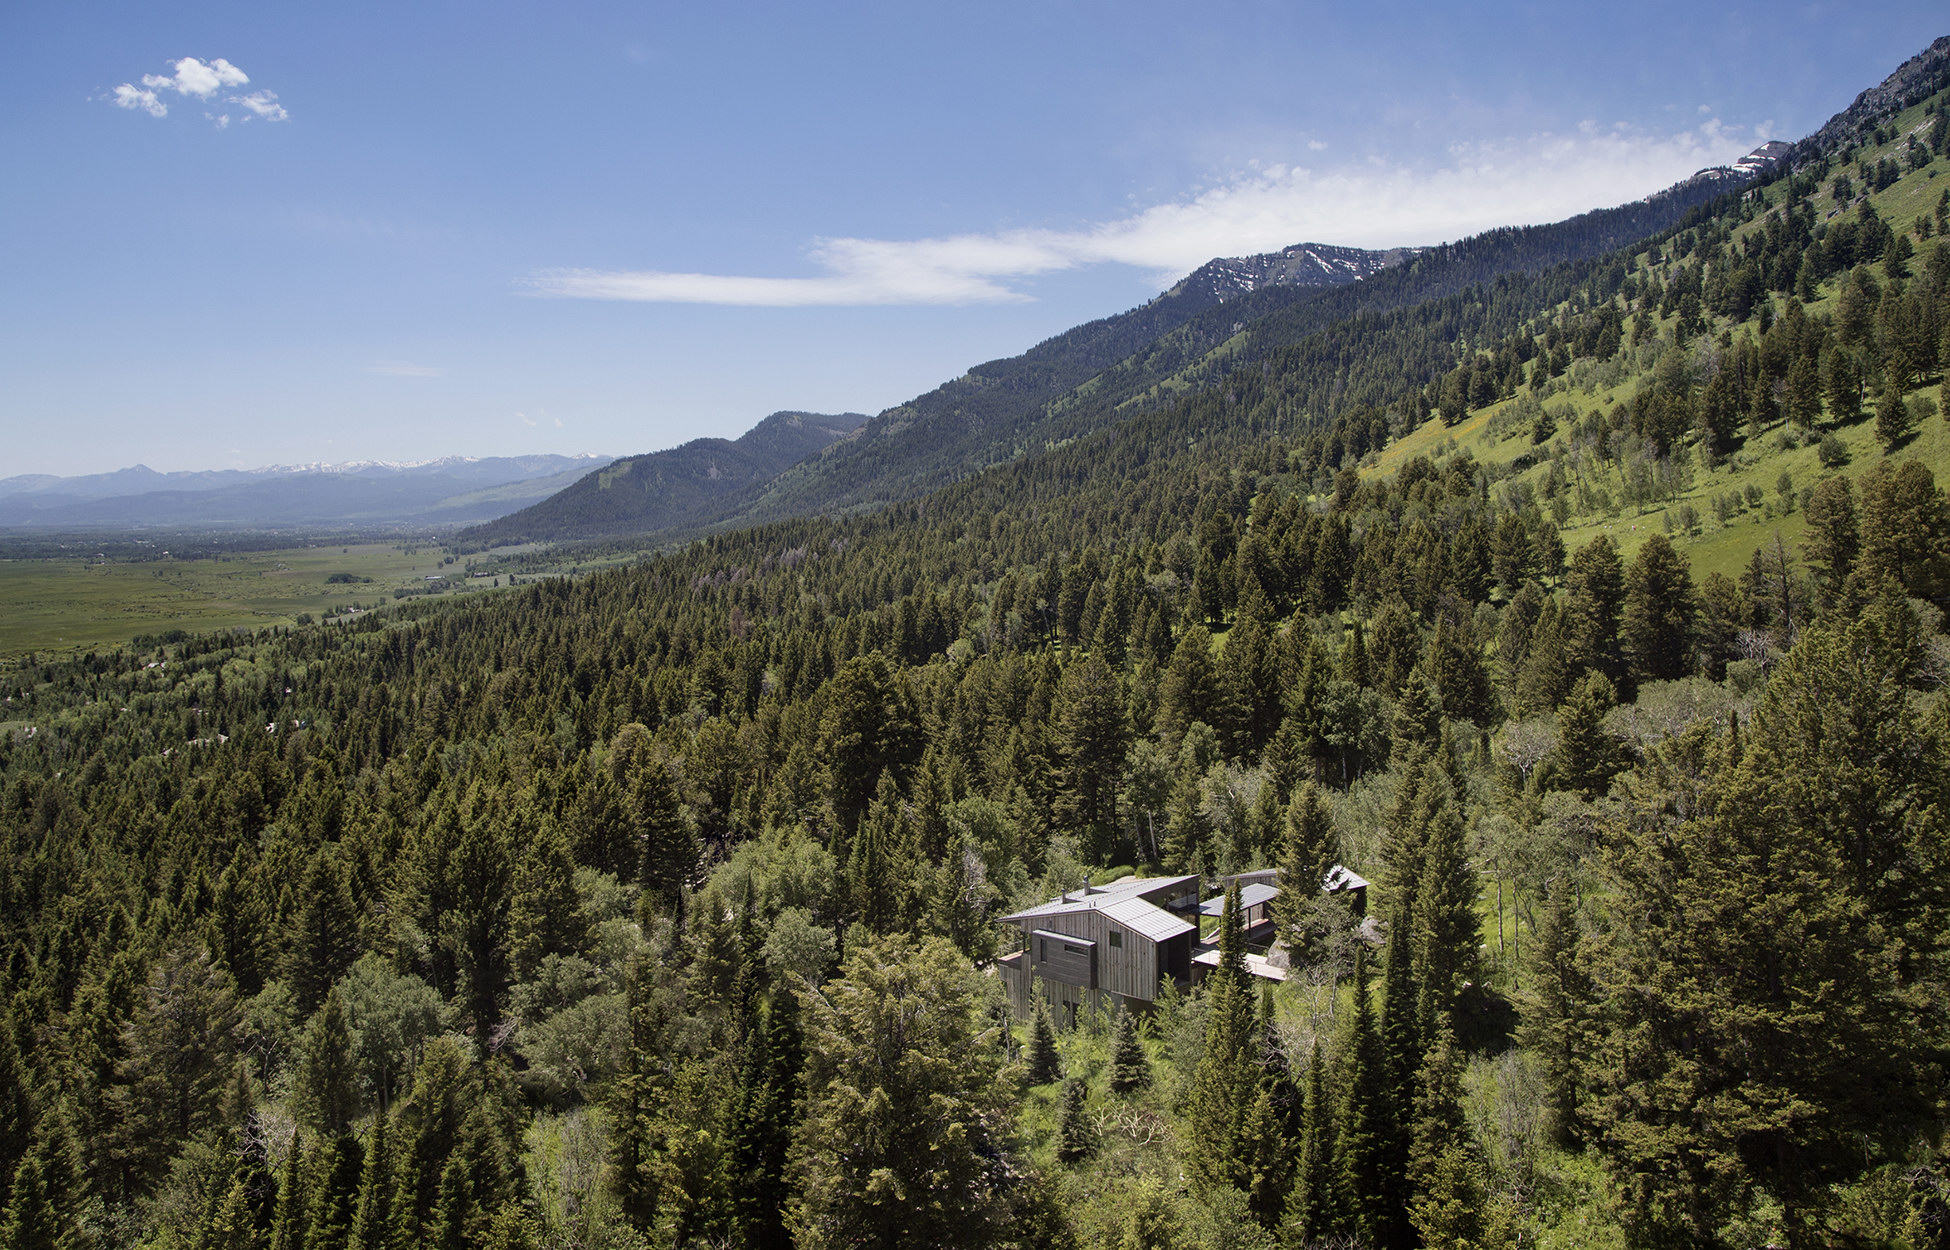 Boulder Retreat by Carney Logan Burke Architects